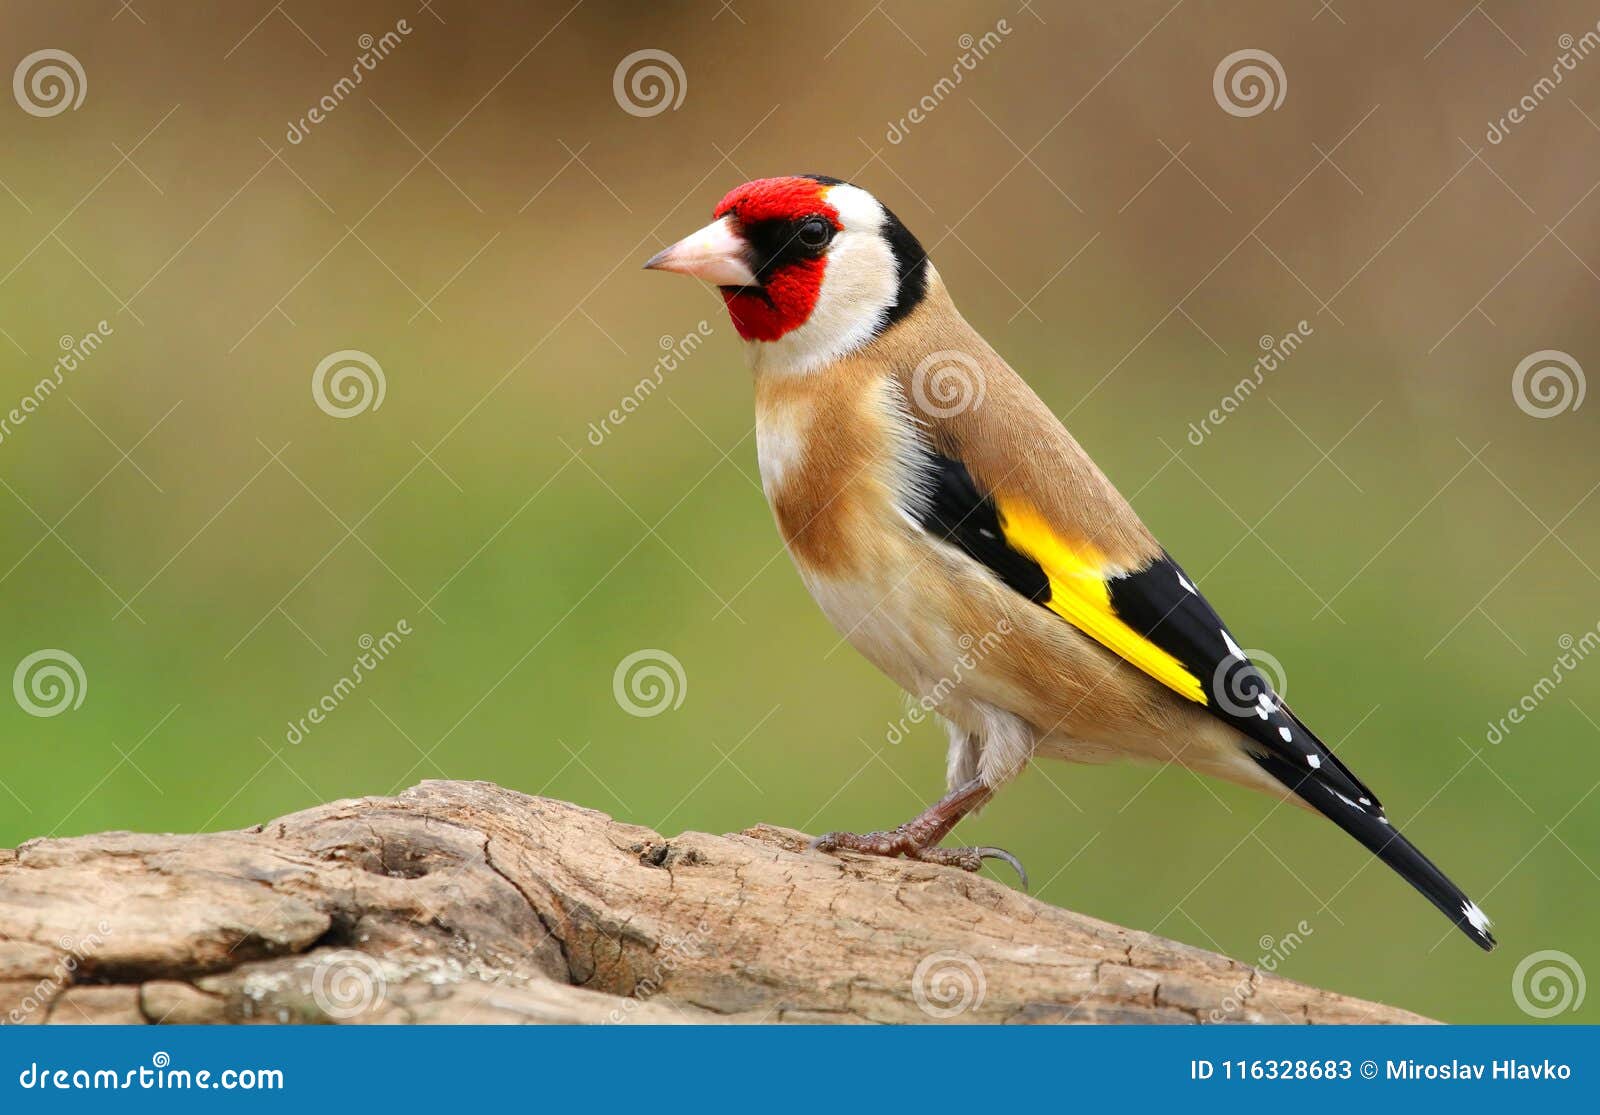 european goldfinch carduelis carduelis